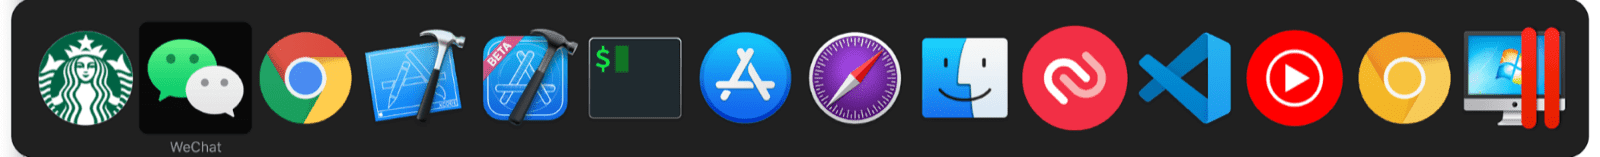 The macOS multitask switcher includes mini apps alongside regular macOS app.